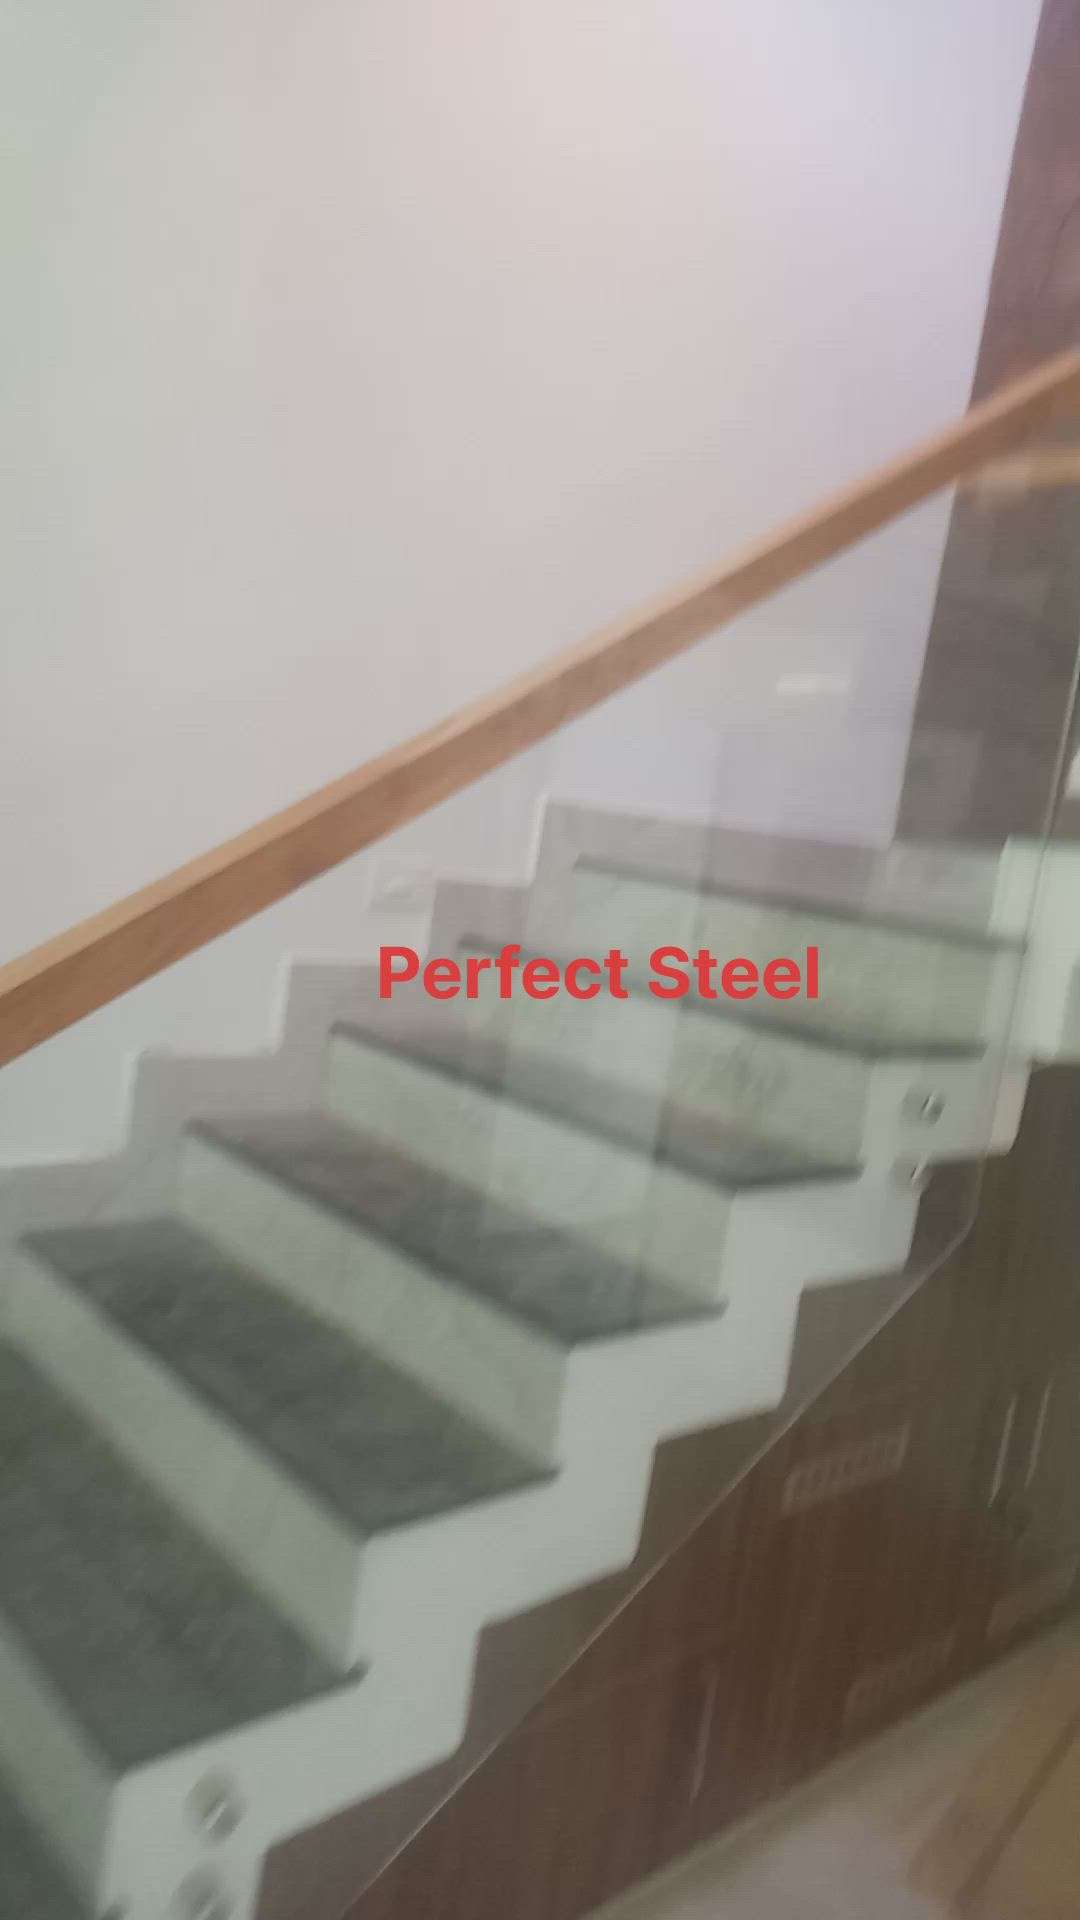 per metter 8500/9000
 #thoghenedglass
#Thoghened glass handrail
 #wood Handrails